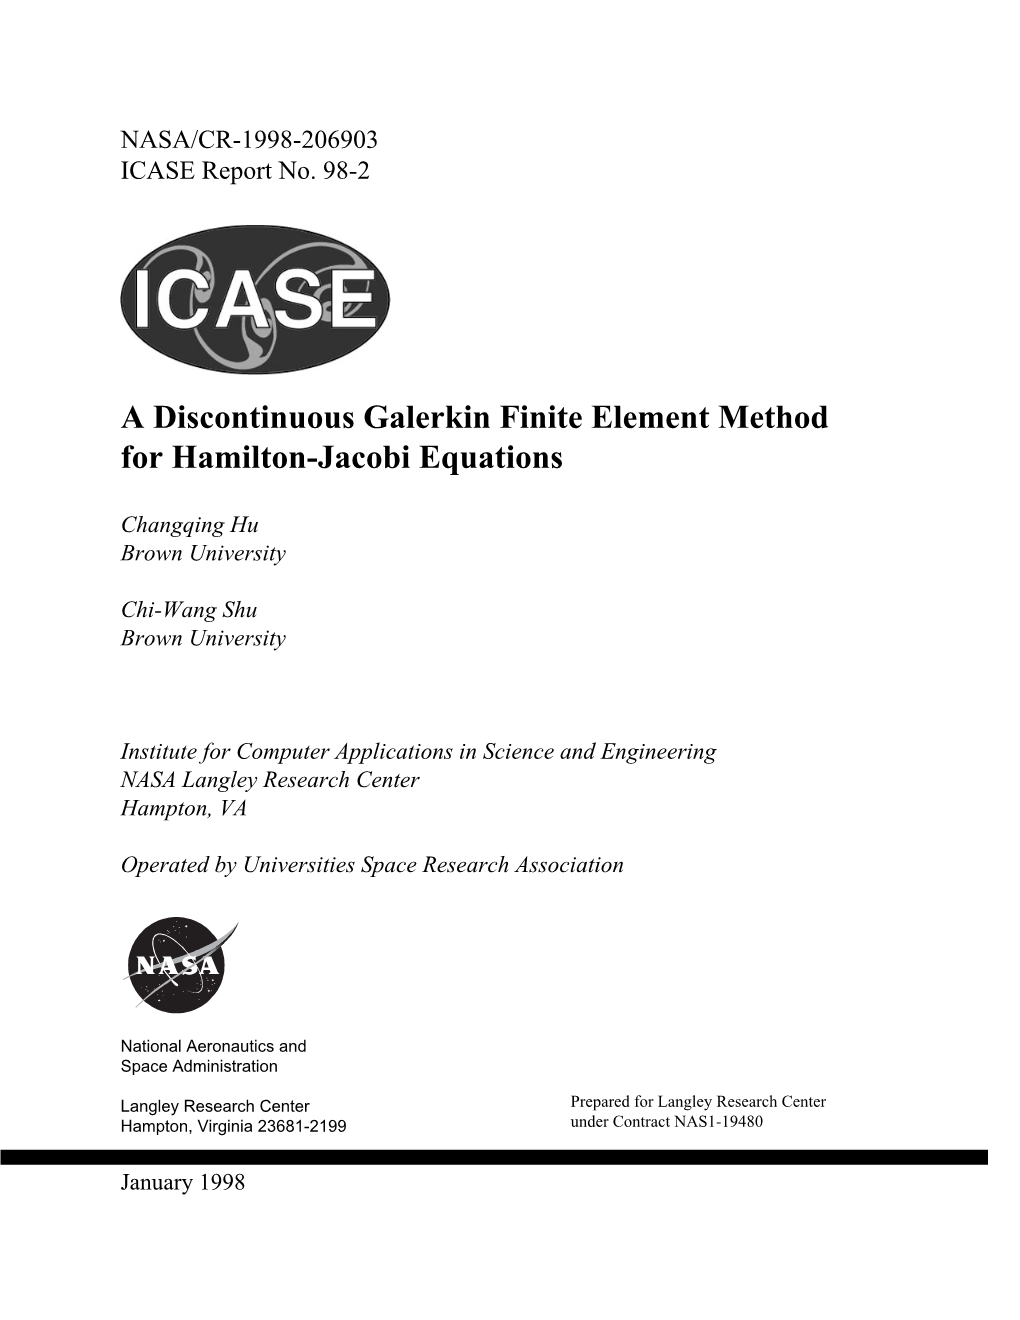 A Discontinuous Galerkin Finite Element Method for Hamilton-Jacobi Equations